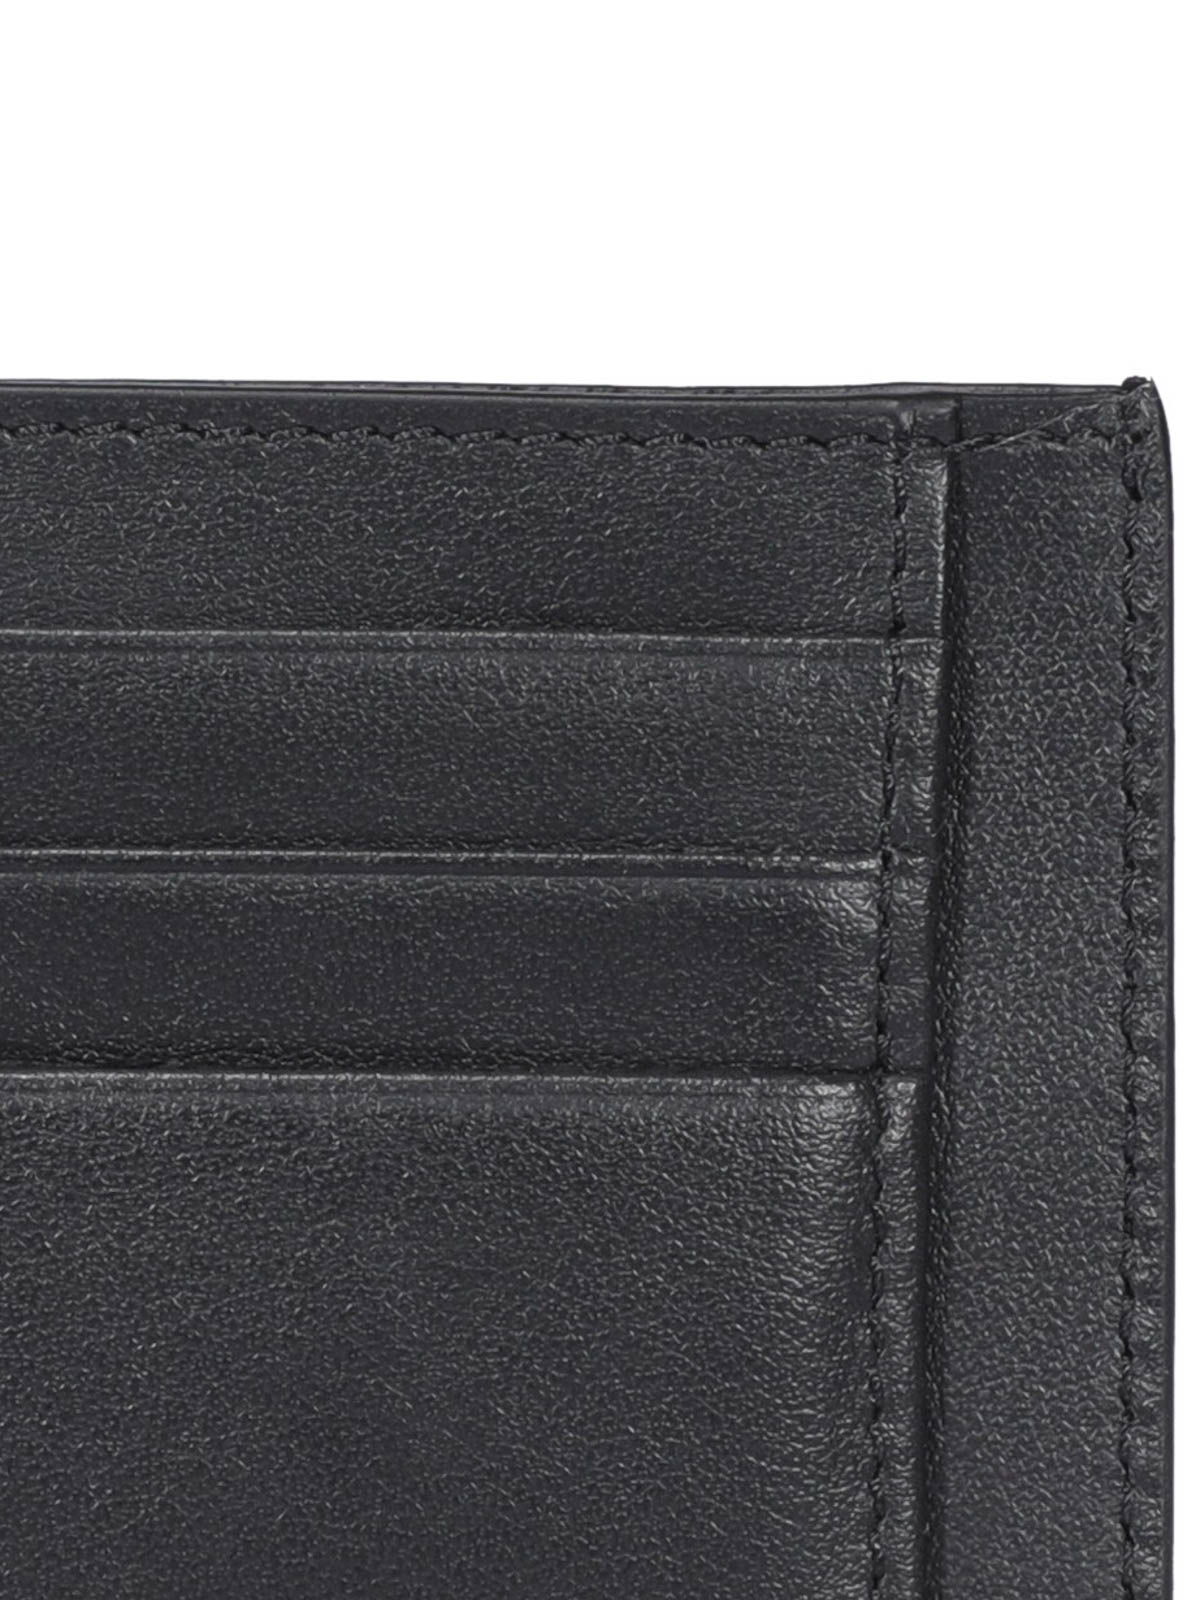 leather card holder buy online